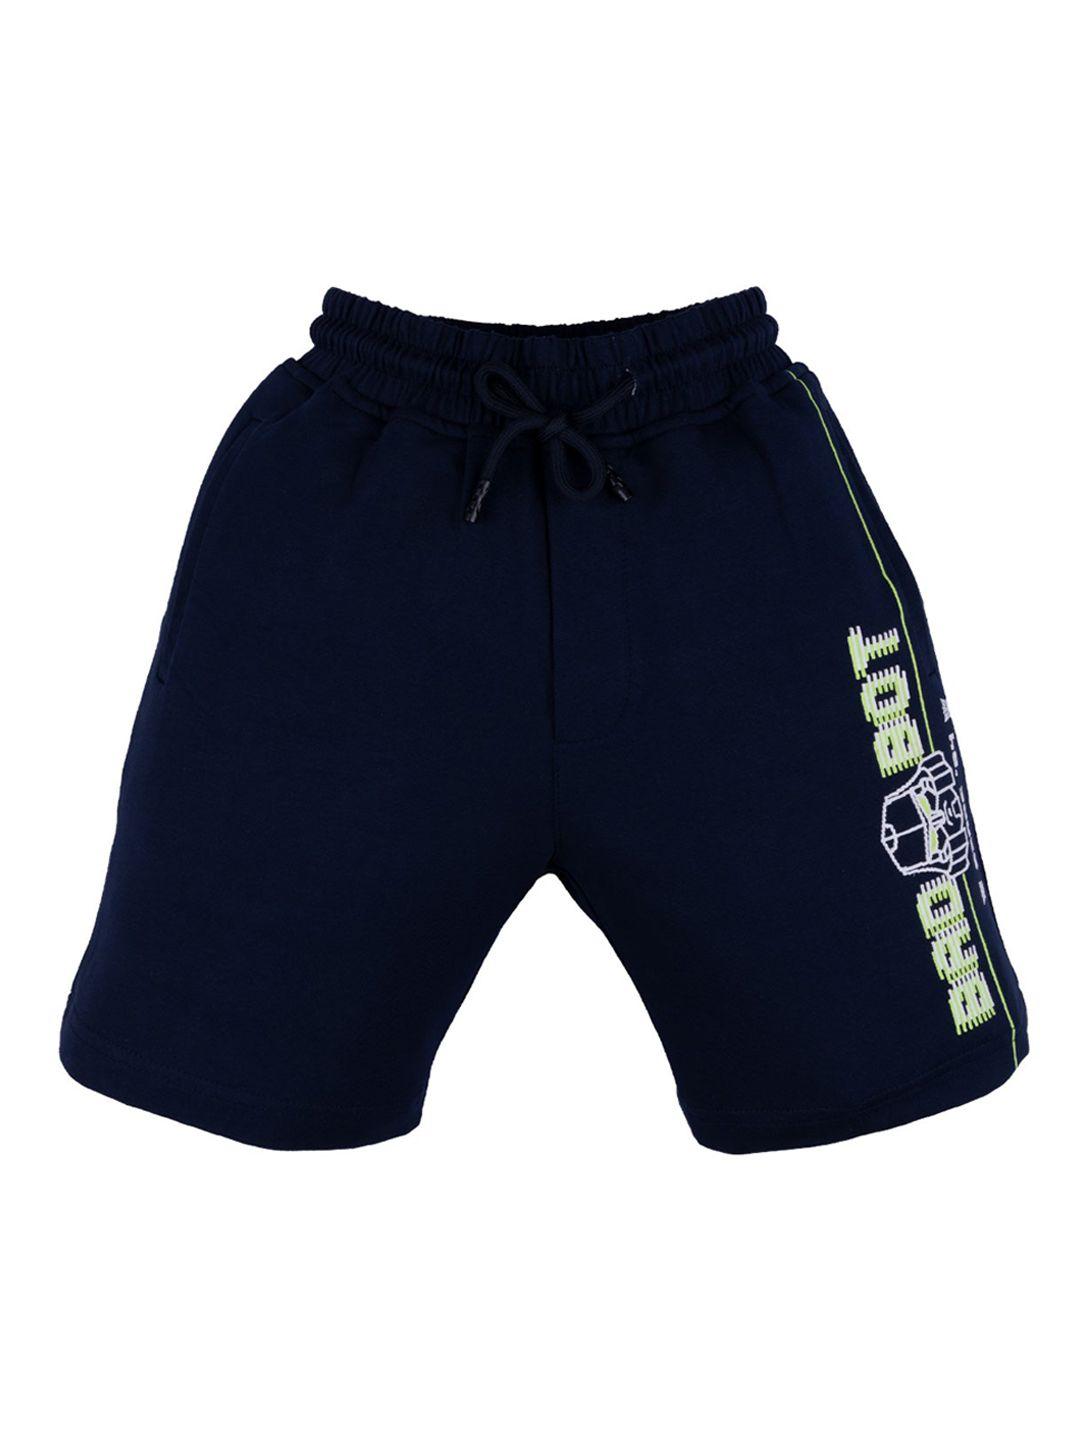 status quo boys navy blue high-rise shorts